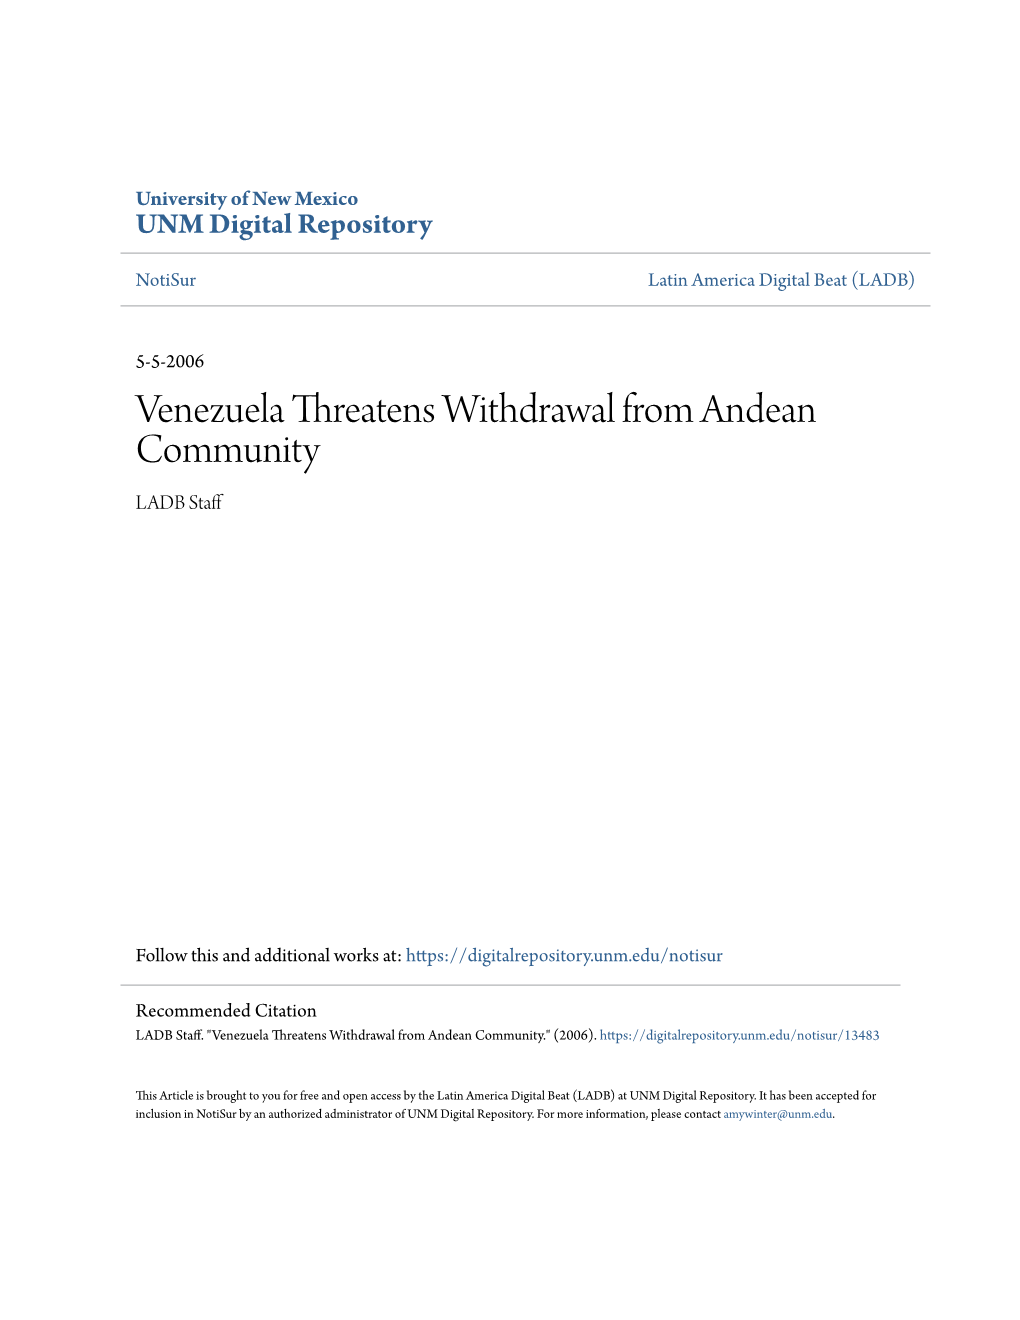 Venezuela Threatens Withdrawal from Andean Community LADB Staff